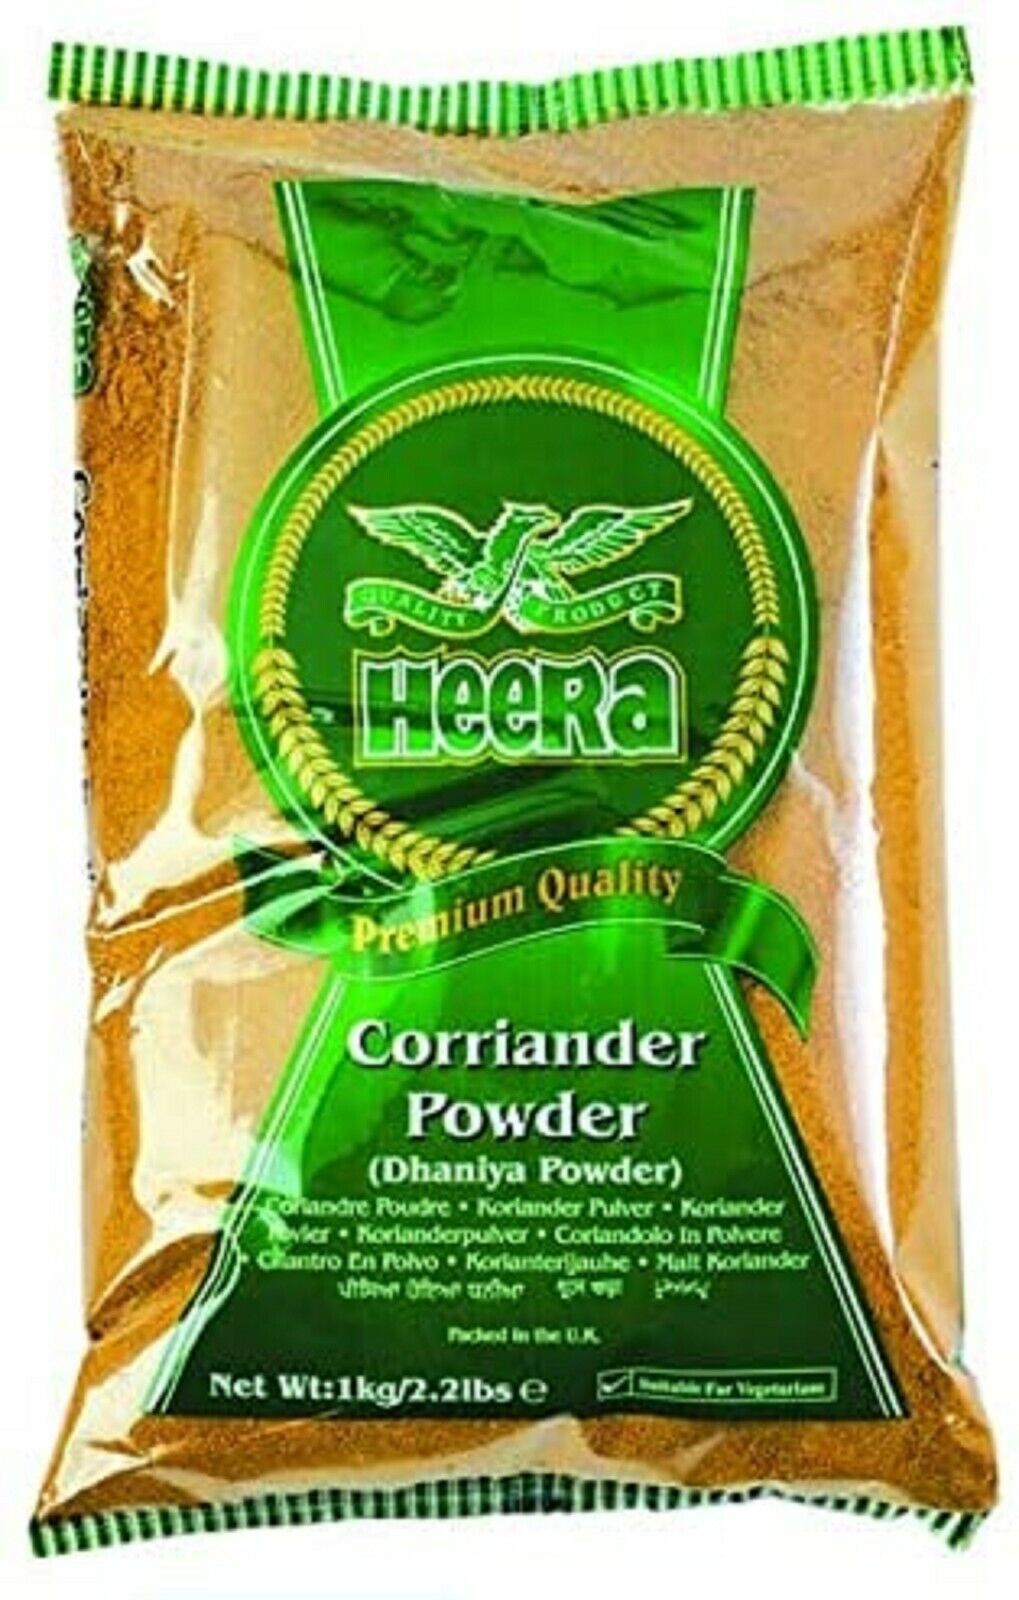 Heera Coriander Powder (Dhaniya Powder)